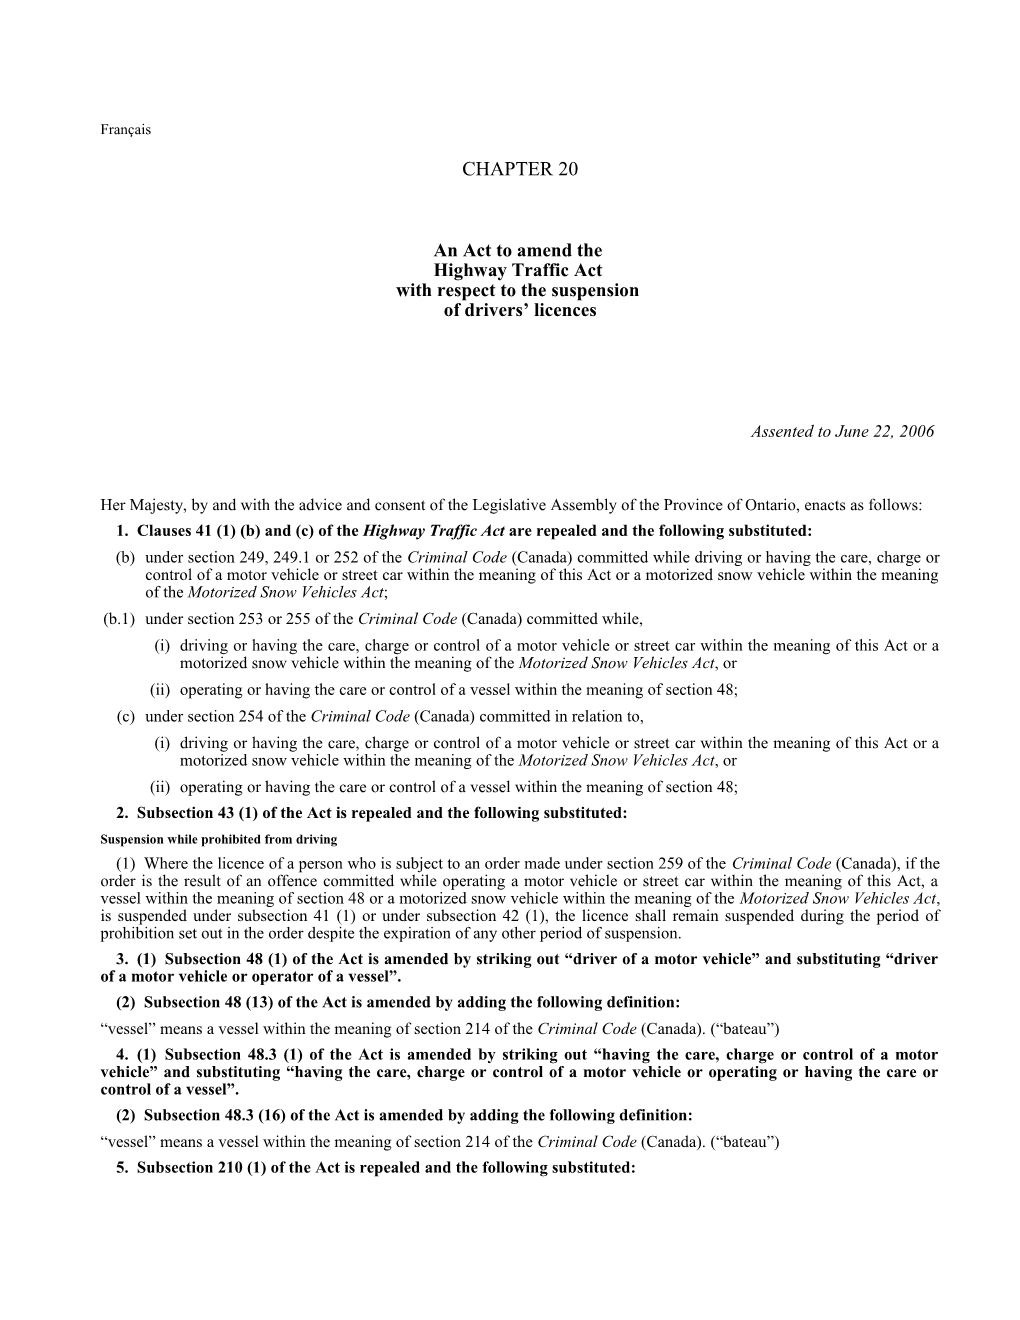 Highway Traffic Amendment Act (Licence Suspensions), 2006, S.O. 2006, C. 20 - Bill 209